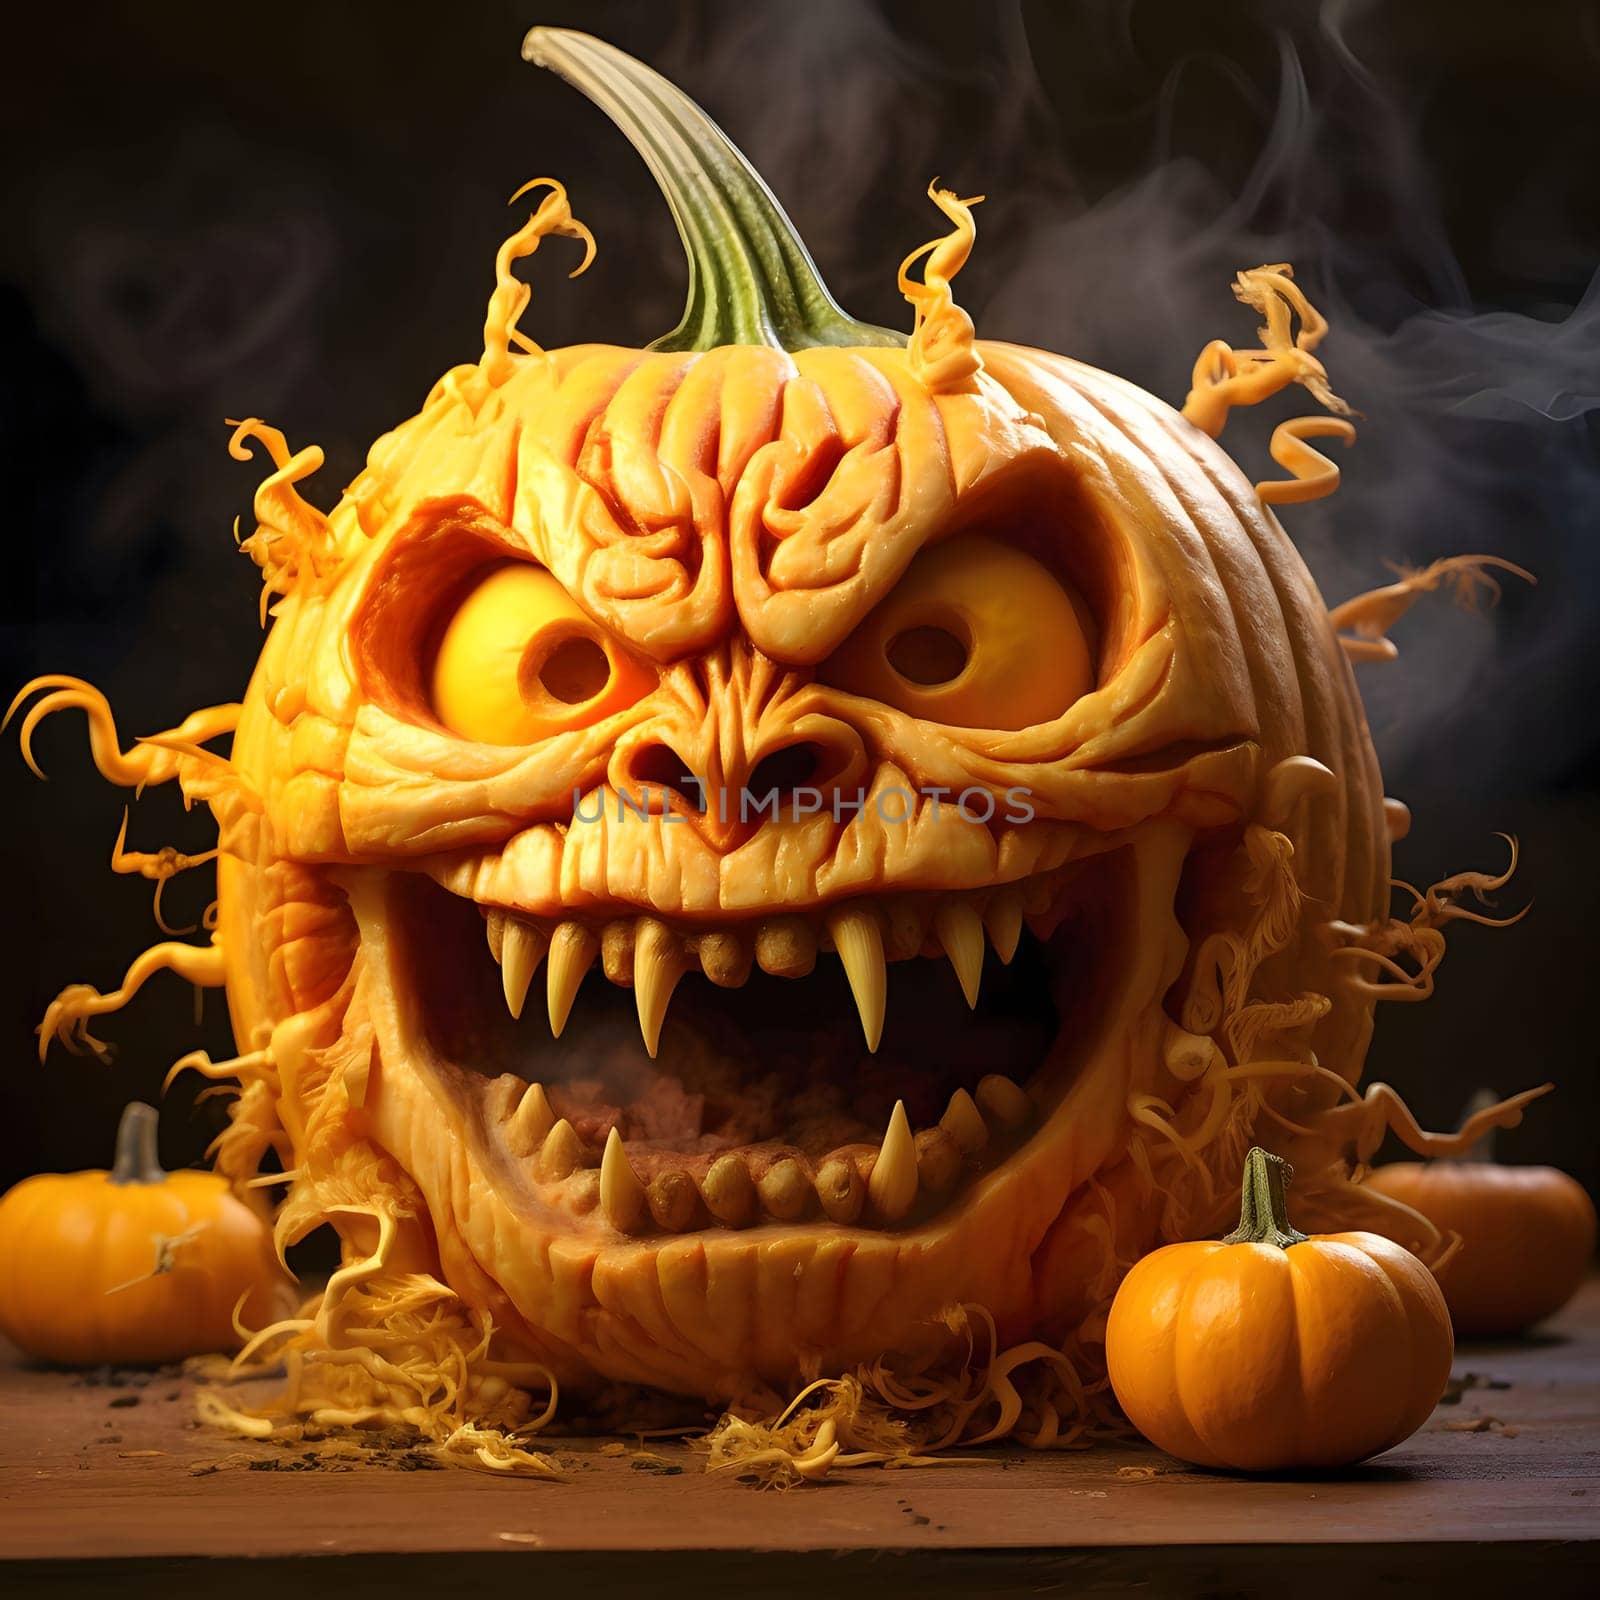 Dark pumpkin with teeth on dark background all around smoke, a Halloween image. by ThemesS